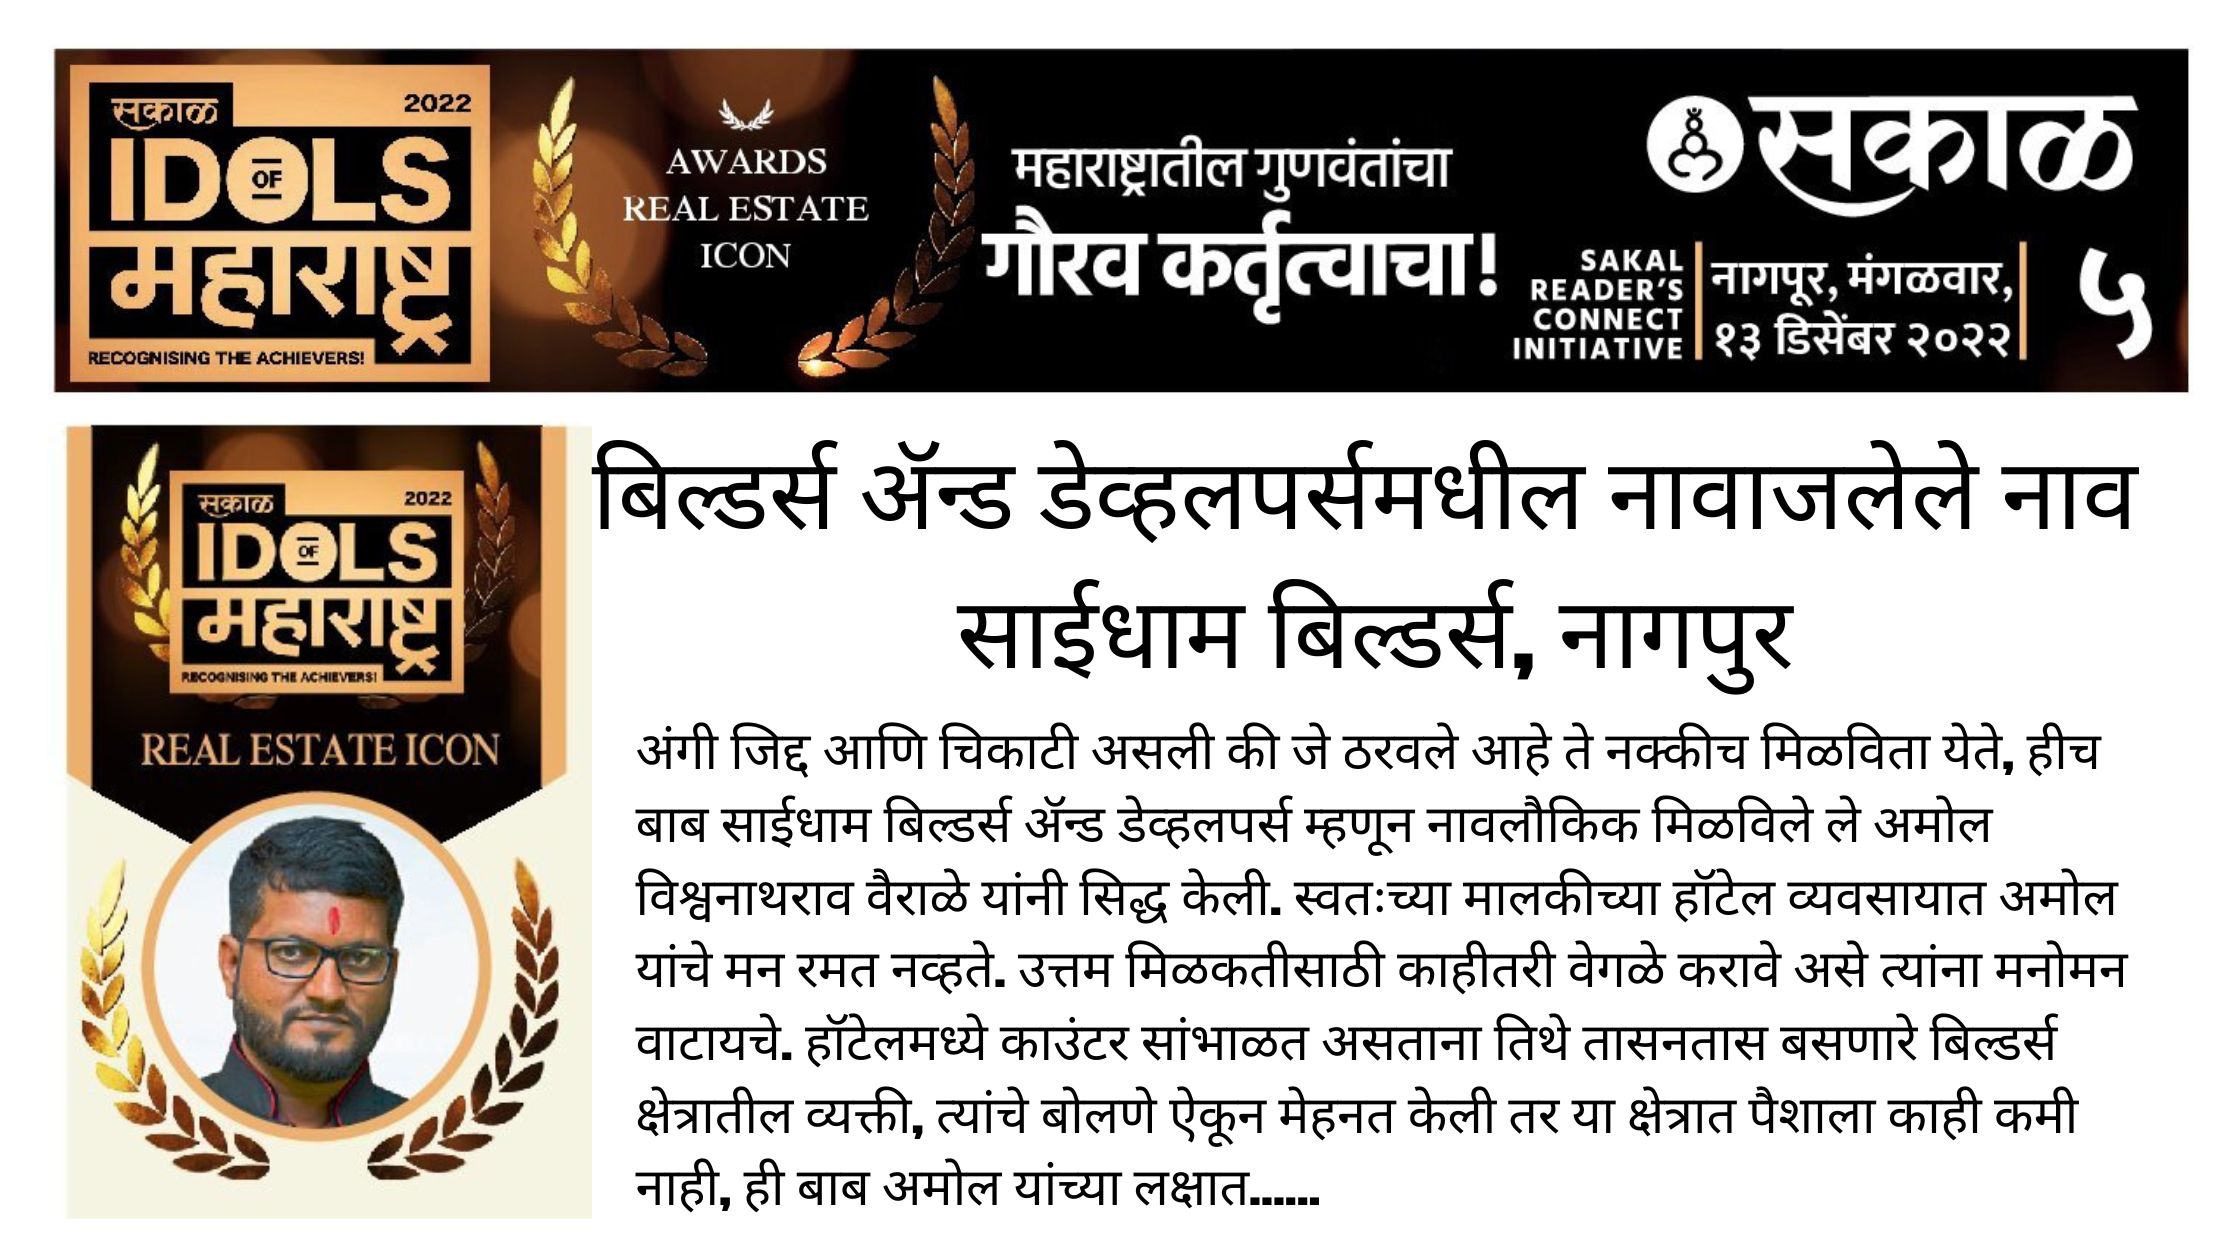  Sakal Idol of Maharashtra - AWAREDS REAL ESTATE ICON 